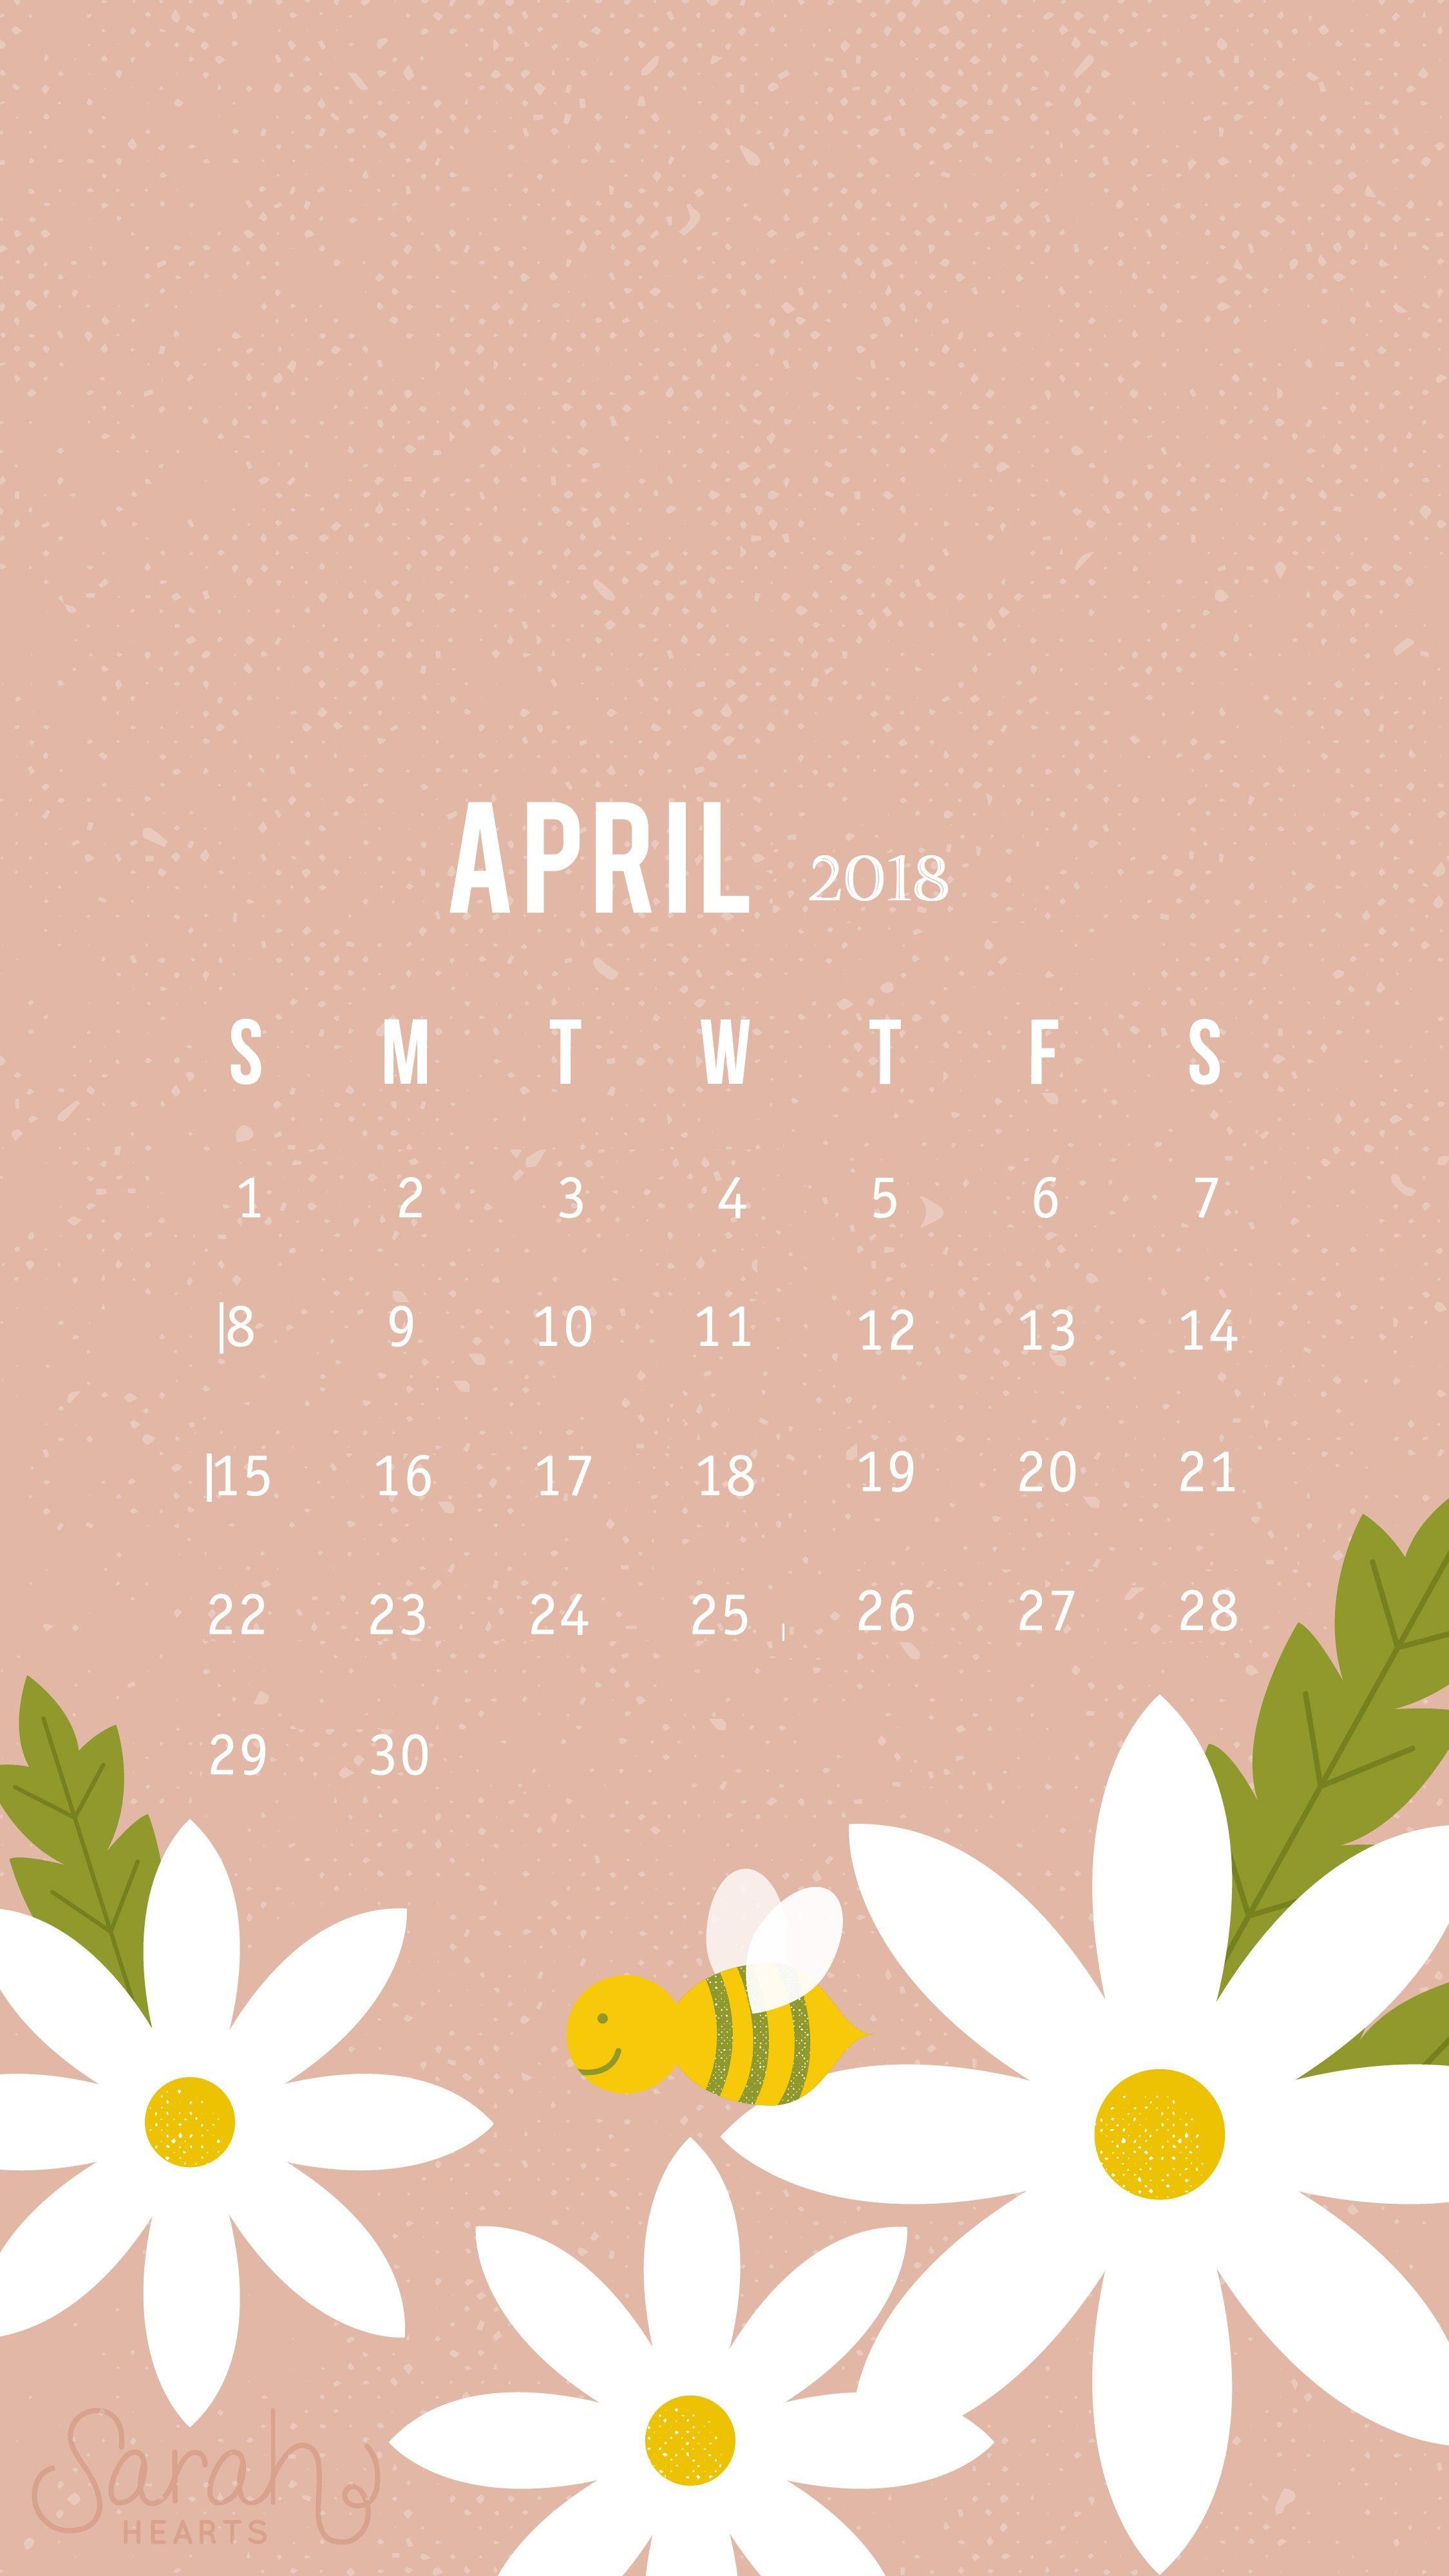 Cute April 2018 iPhone Calendar Wallpaper. Calendar 2018